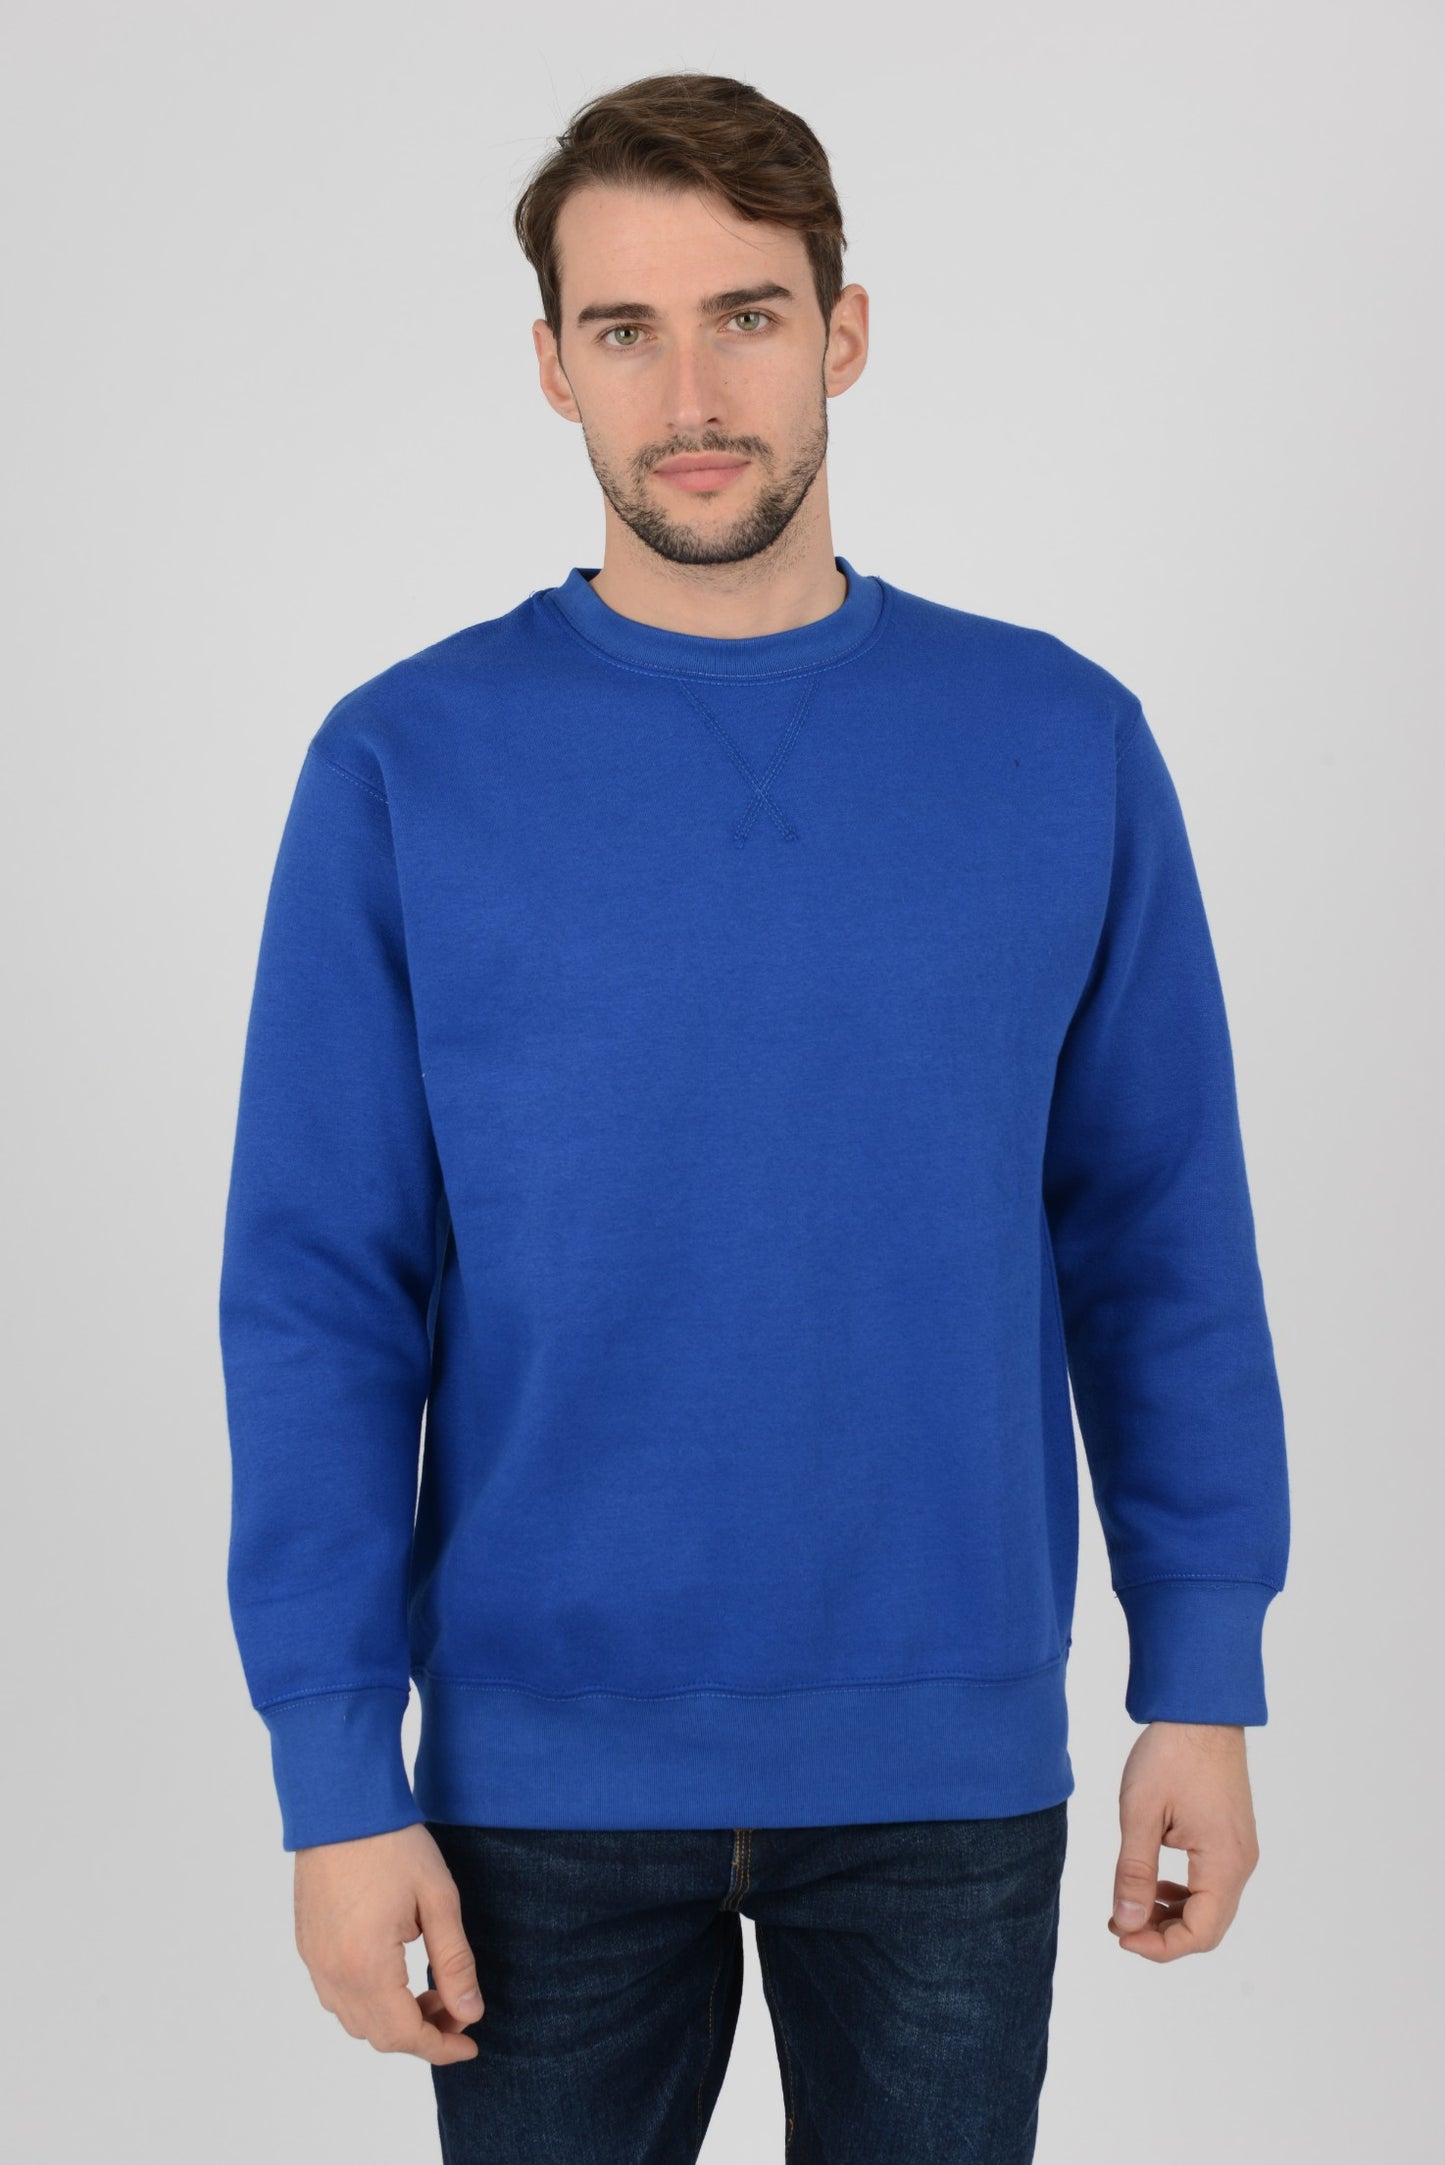 Mens-Plain-Fleece-Sweatshirt-Jersey-Royal-Blue